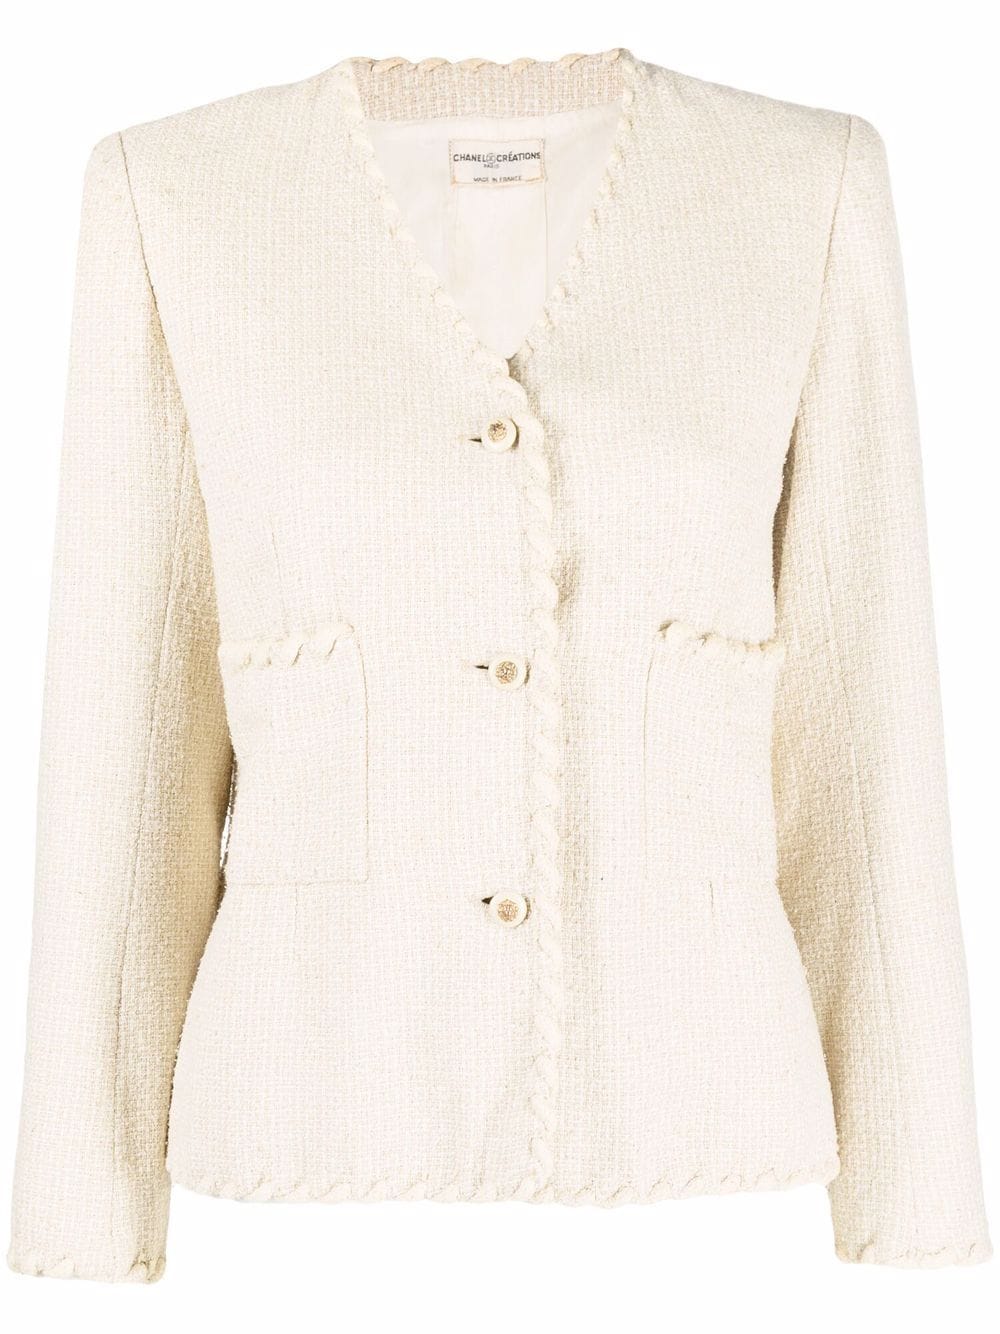 Chanel Vintage Francine Tweed Blazer, $1,250, Nasty Gal